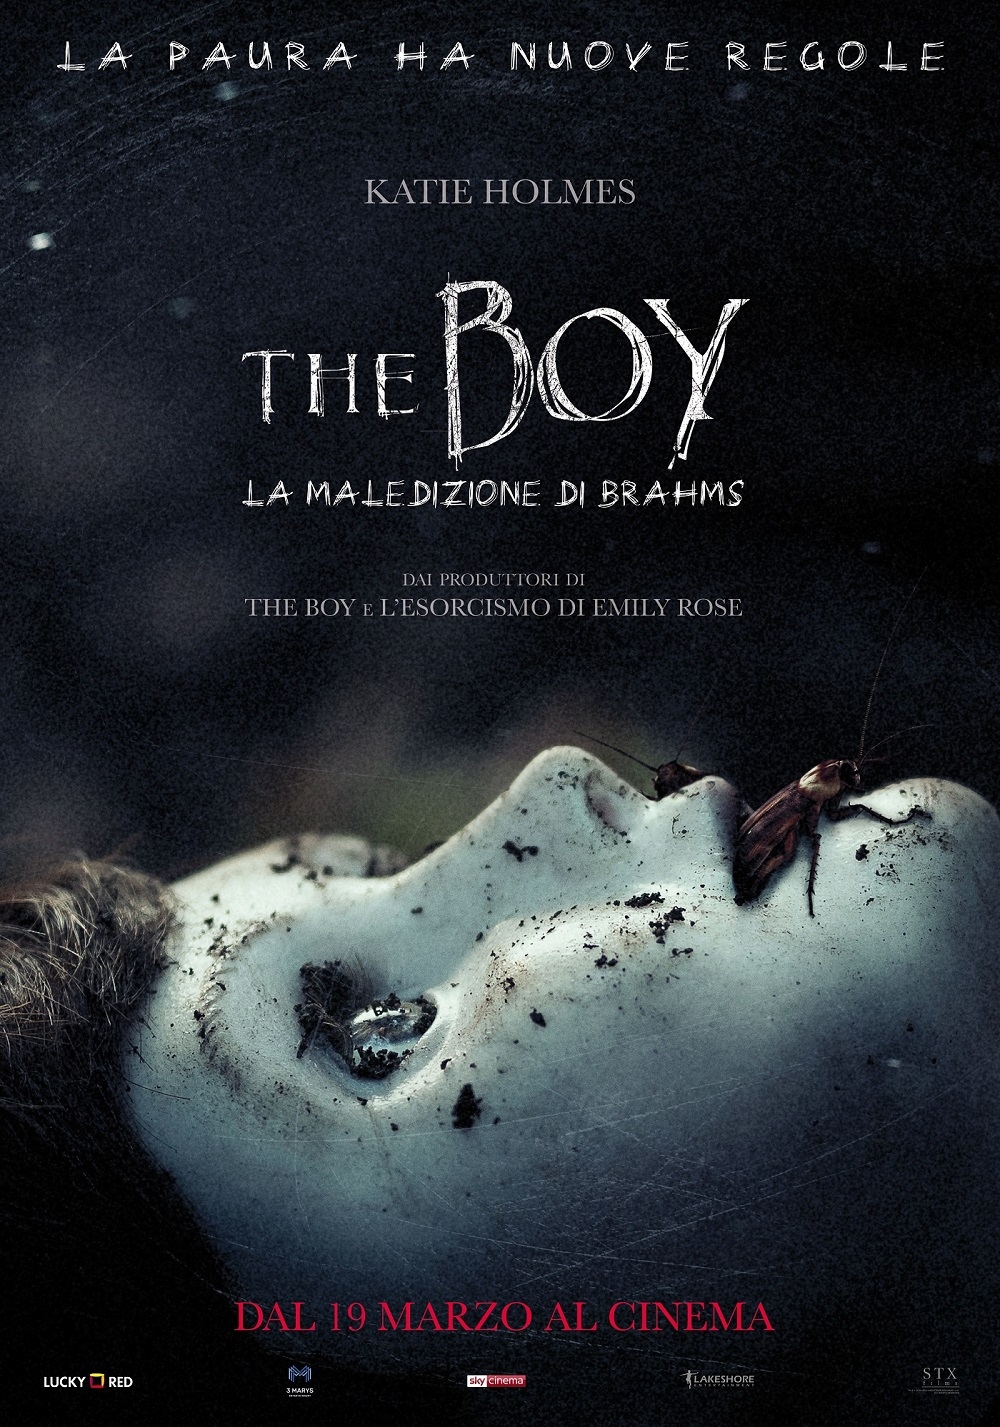 The Boy trailer